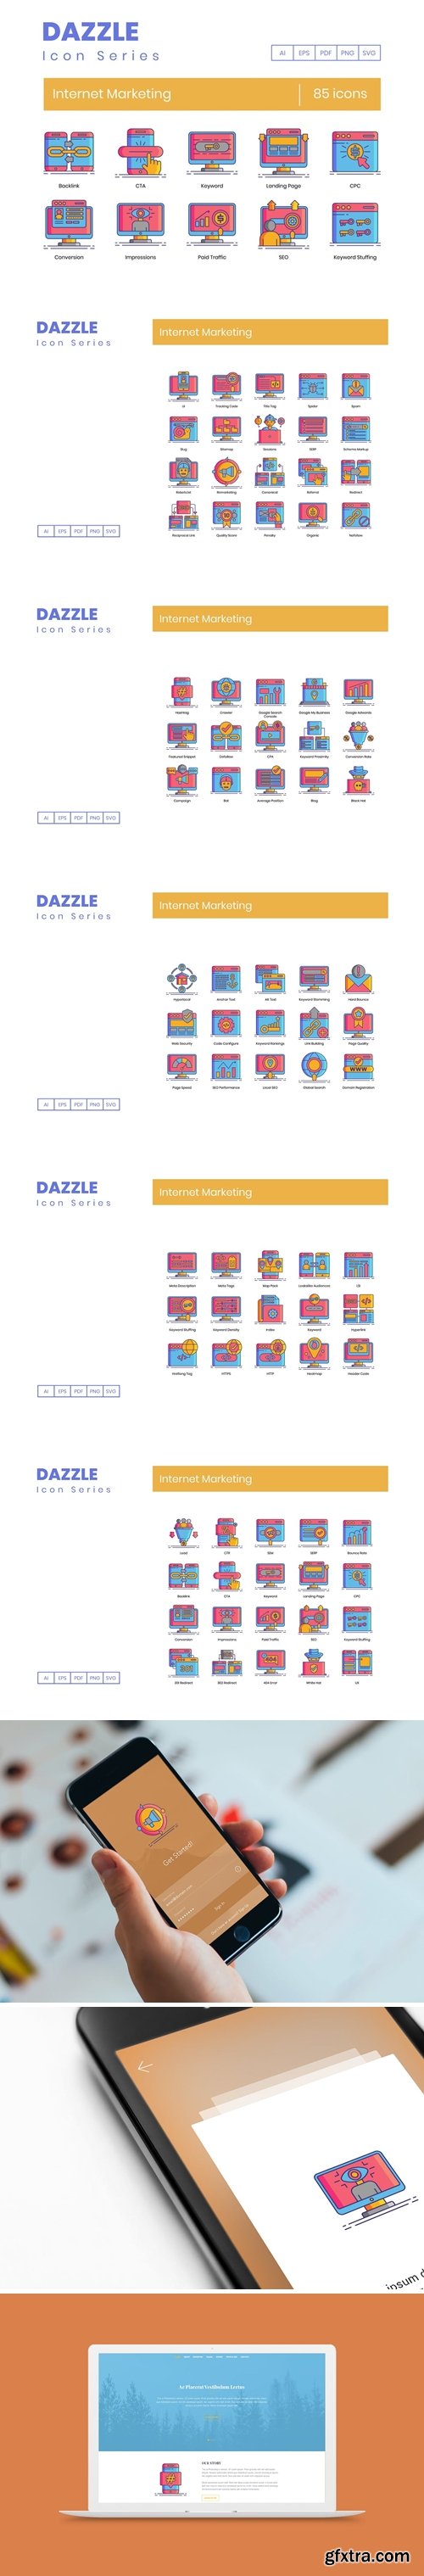 85 Internet Marketing Icons - Dazzle Series